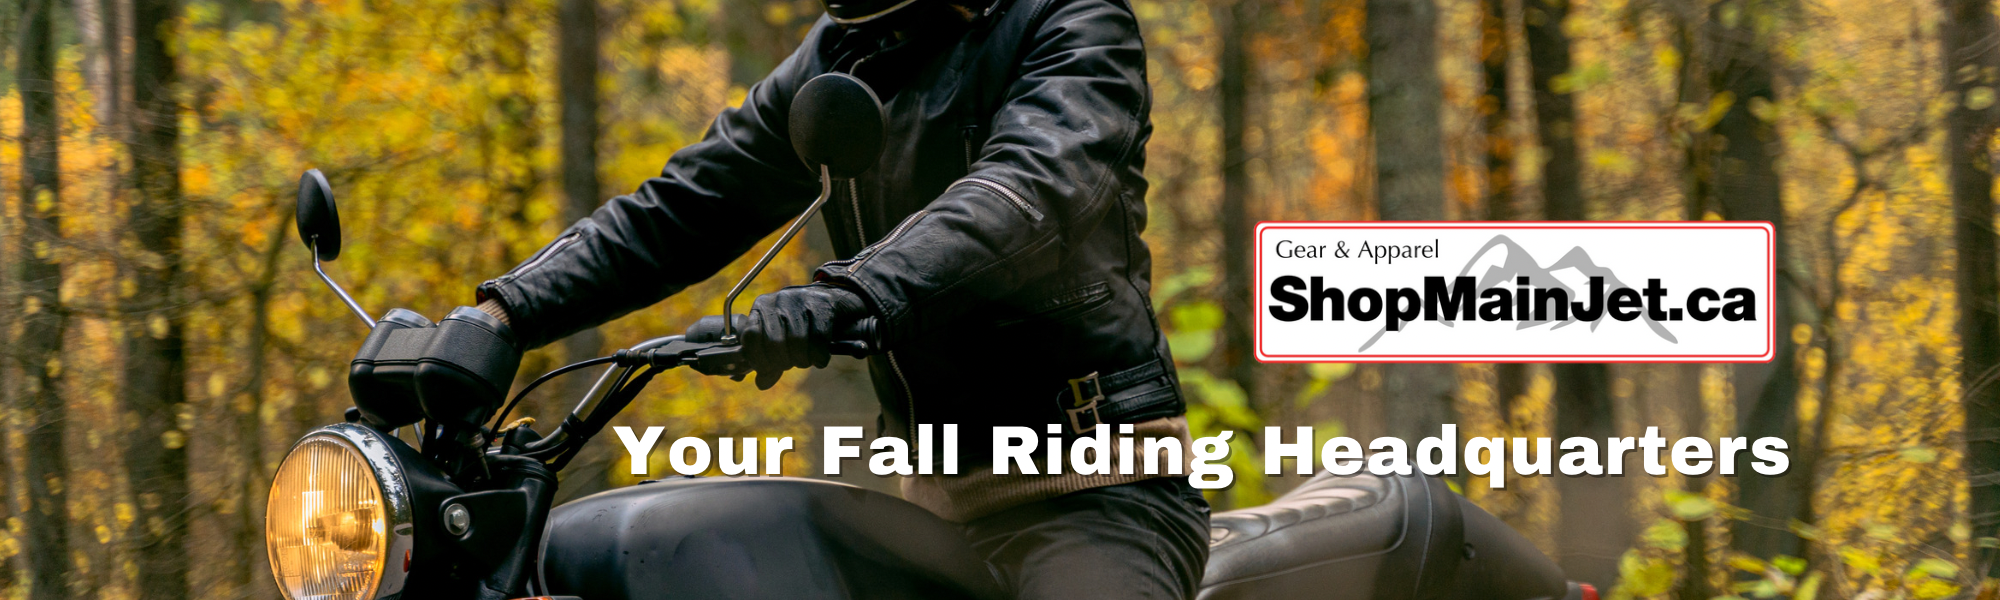 Fall Riding